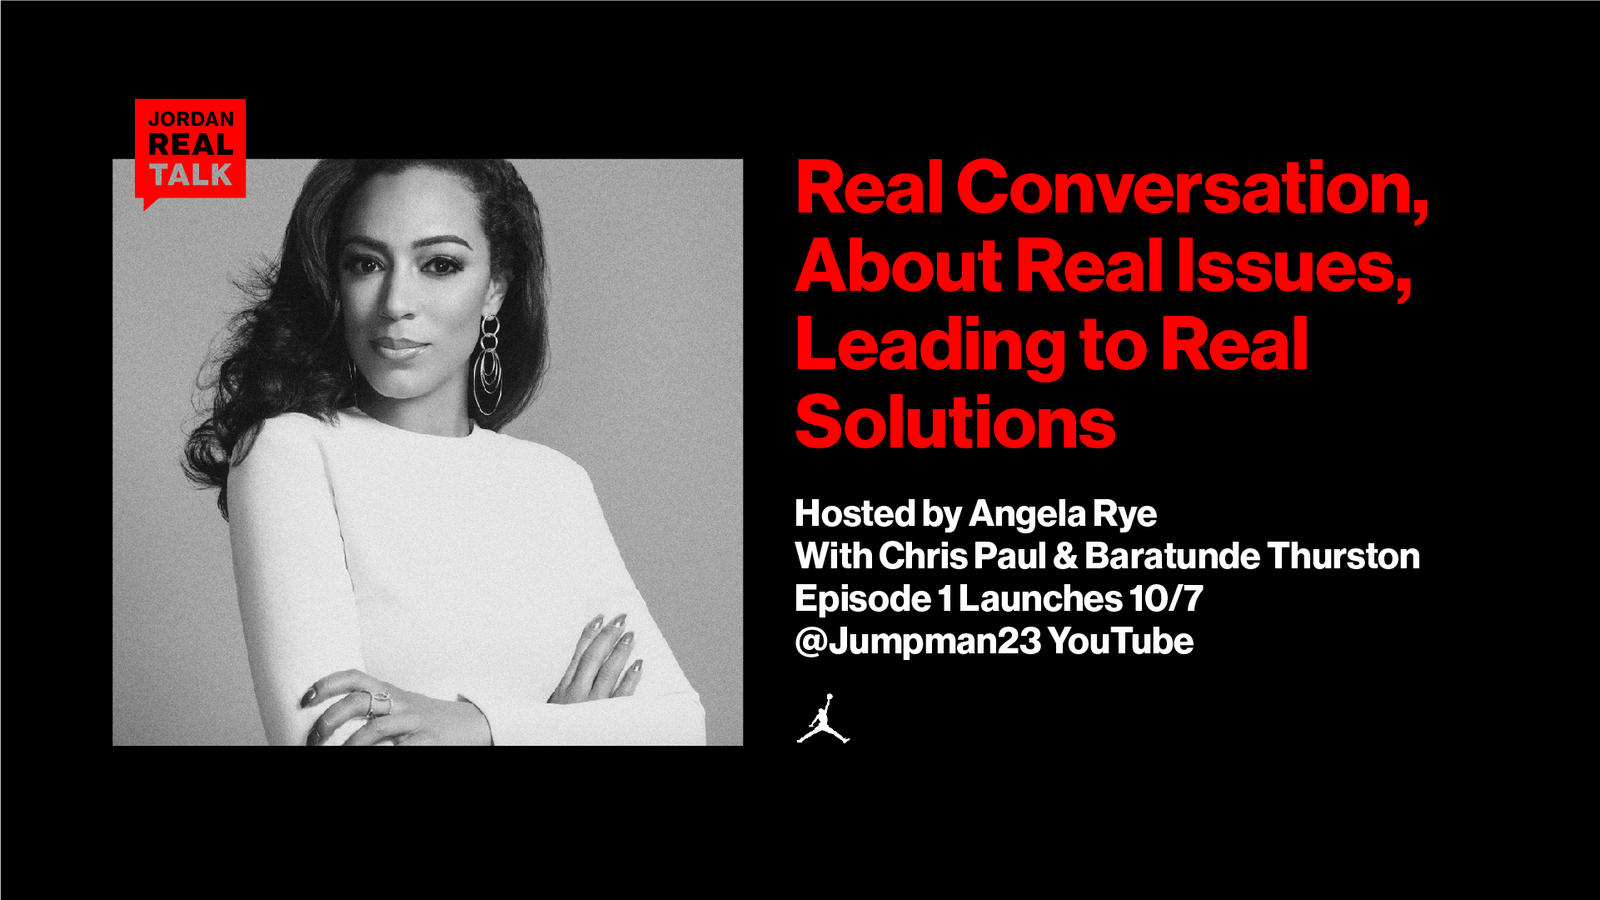 Angela Rye to Host Jordan Brand’s ‘REAL TALK’ Series Dedicated to Social Issues